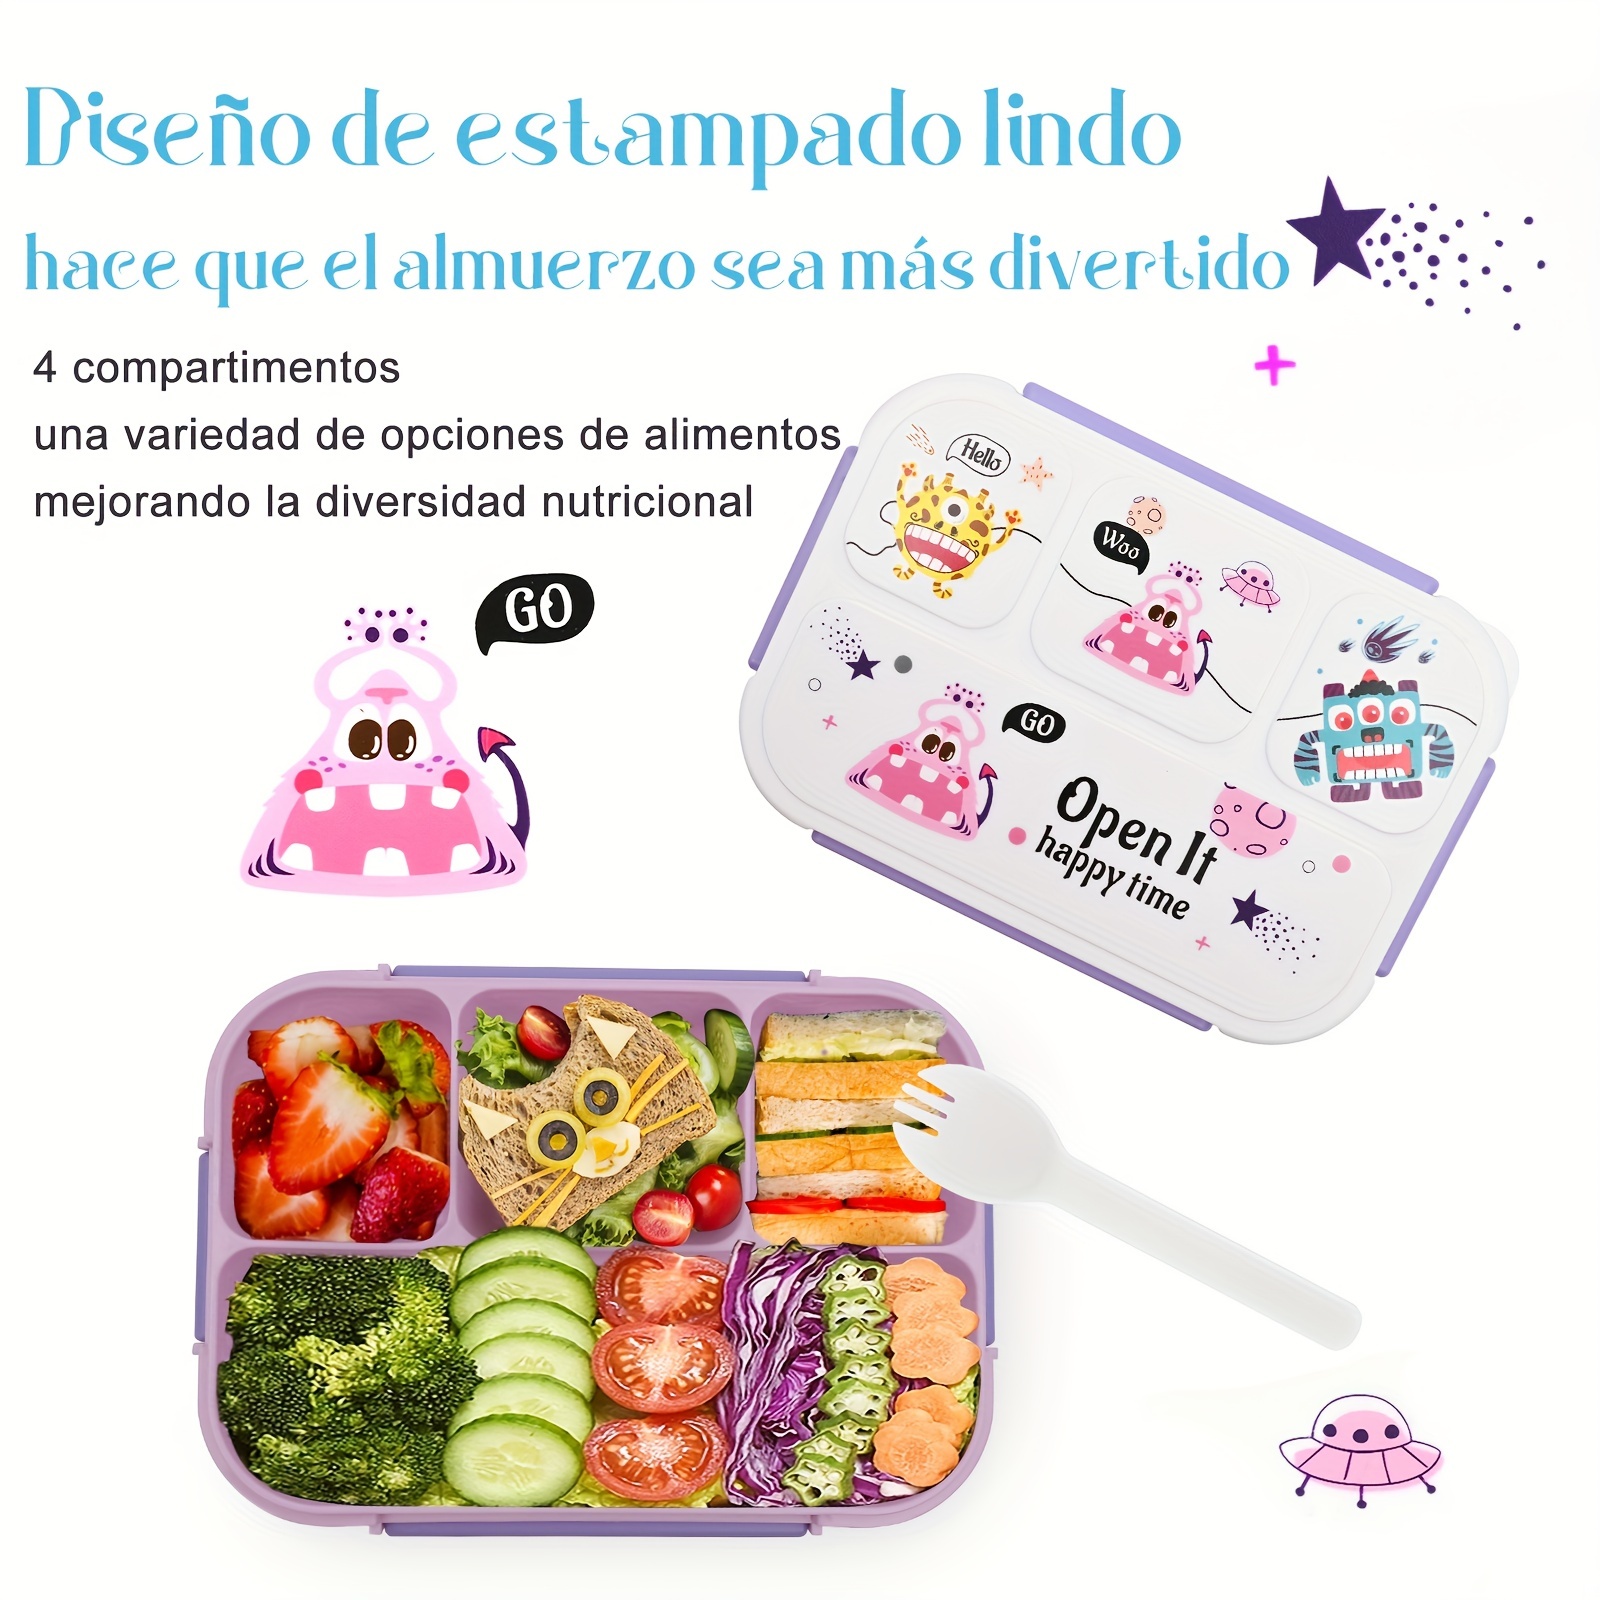 Bento Box Lunch Box Para Adultos Niños Contenedores De Compa